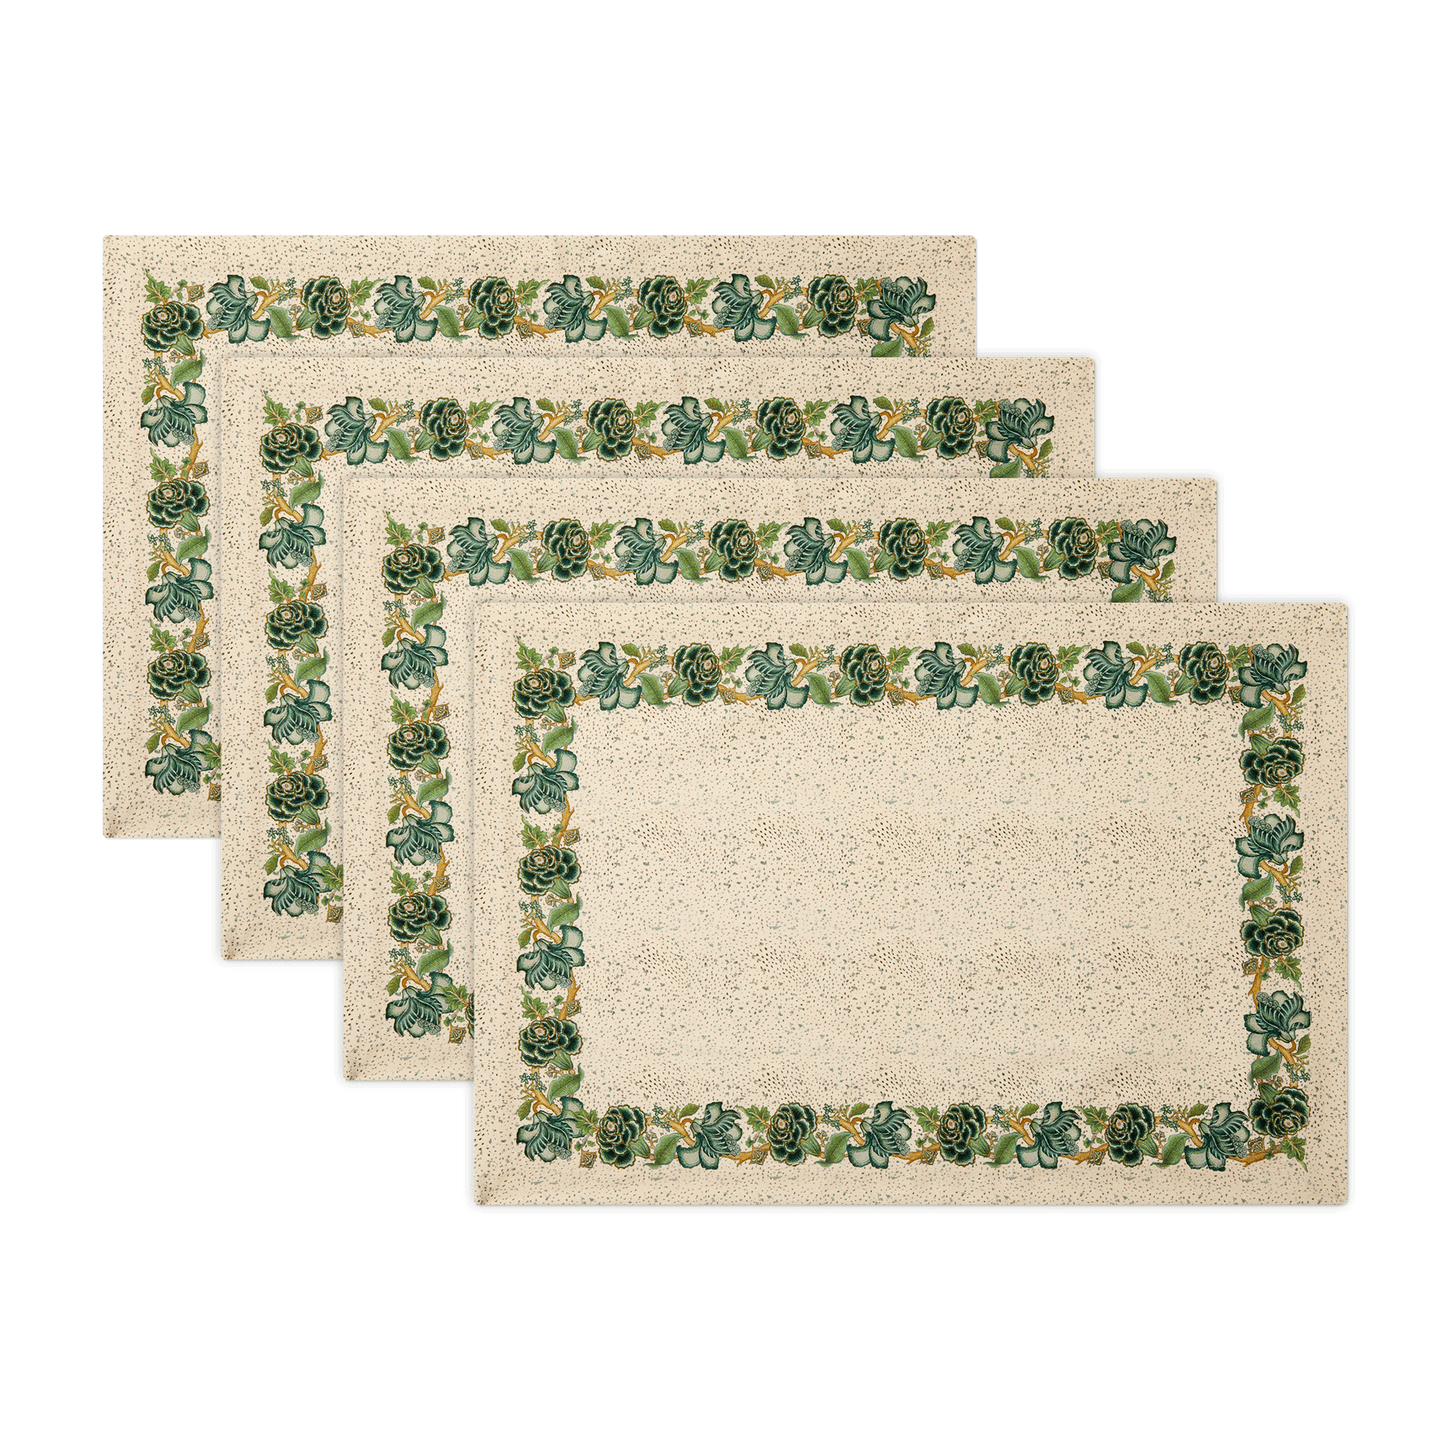 4-Piece Rectangular Placemat Set in Jardin Green Floral Cotton